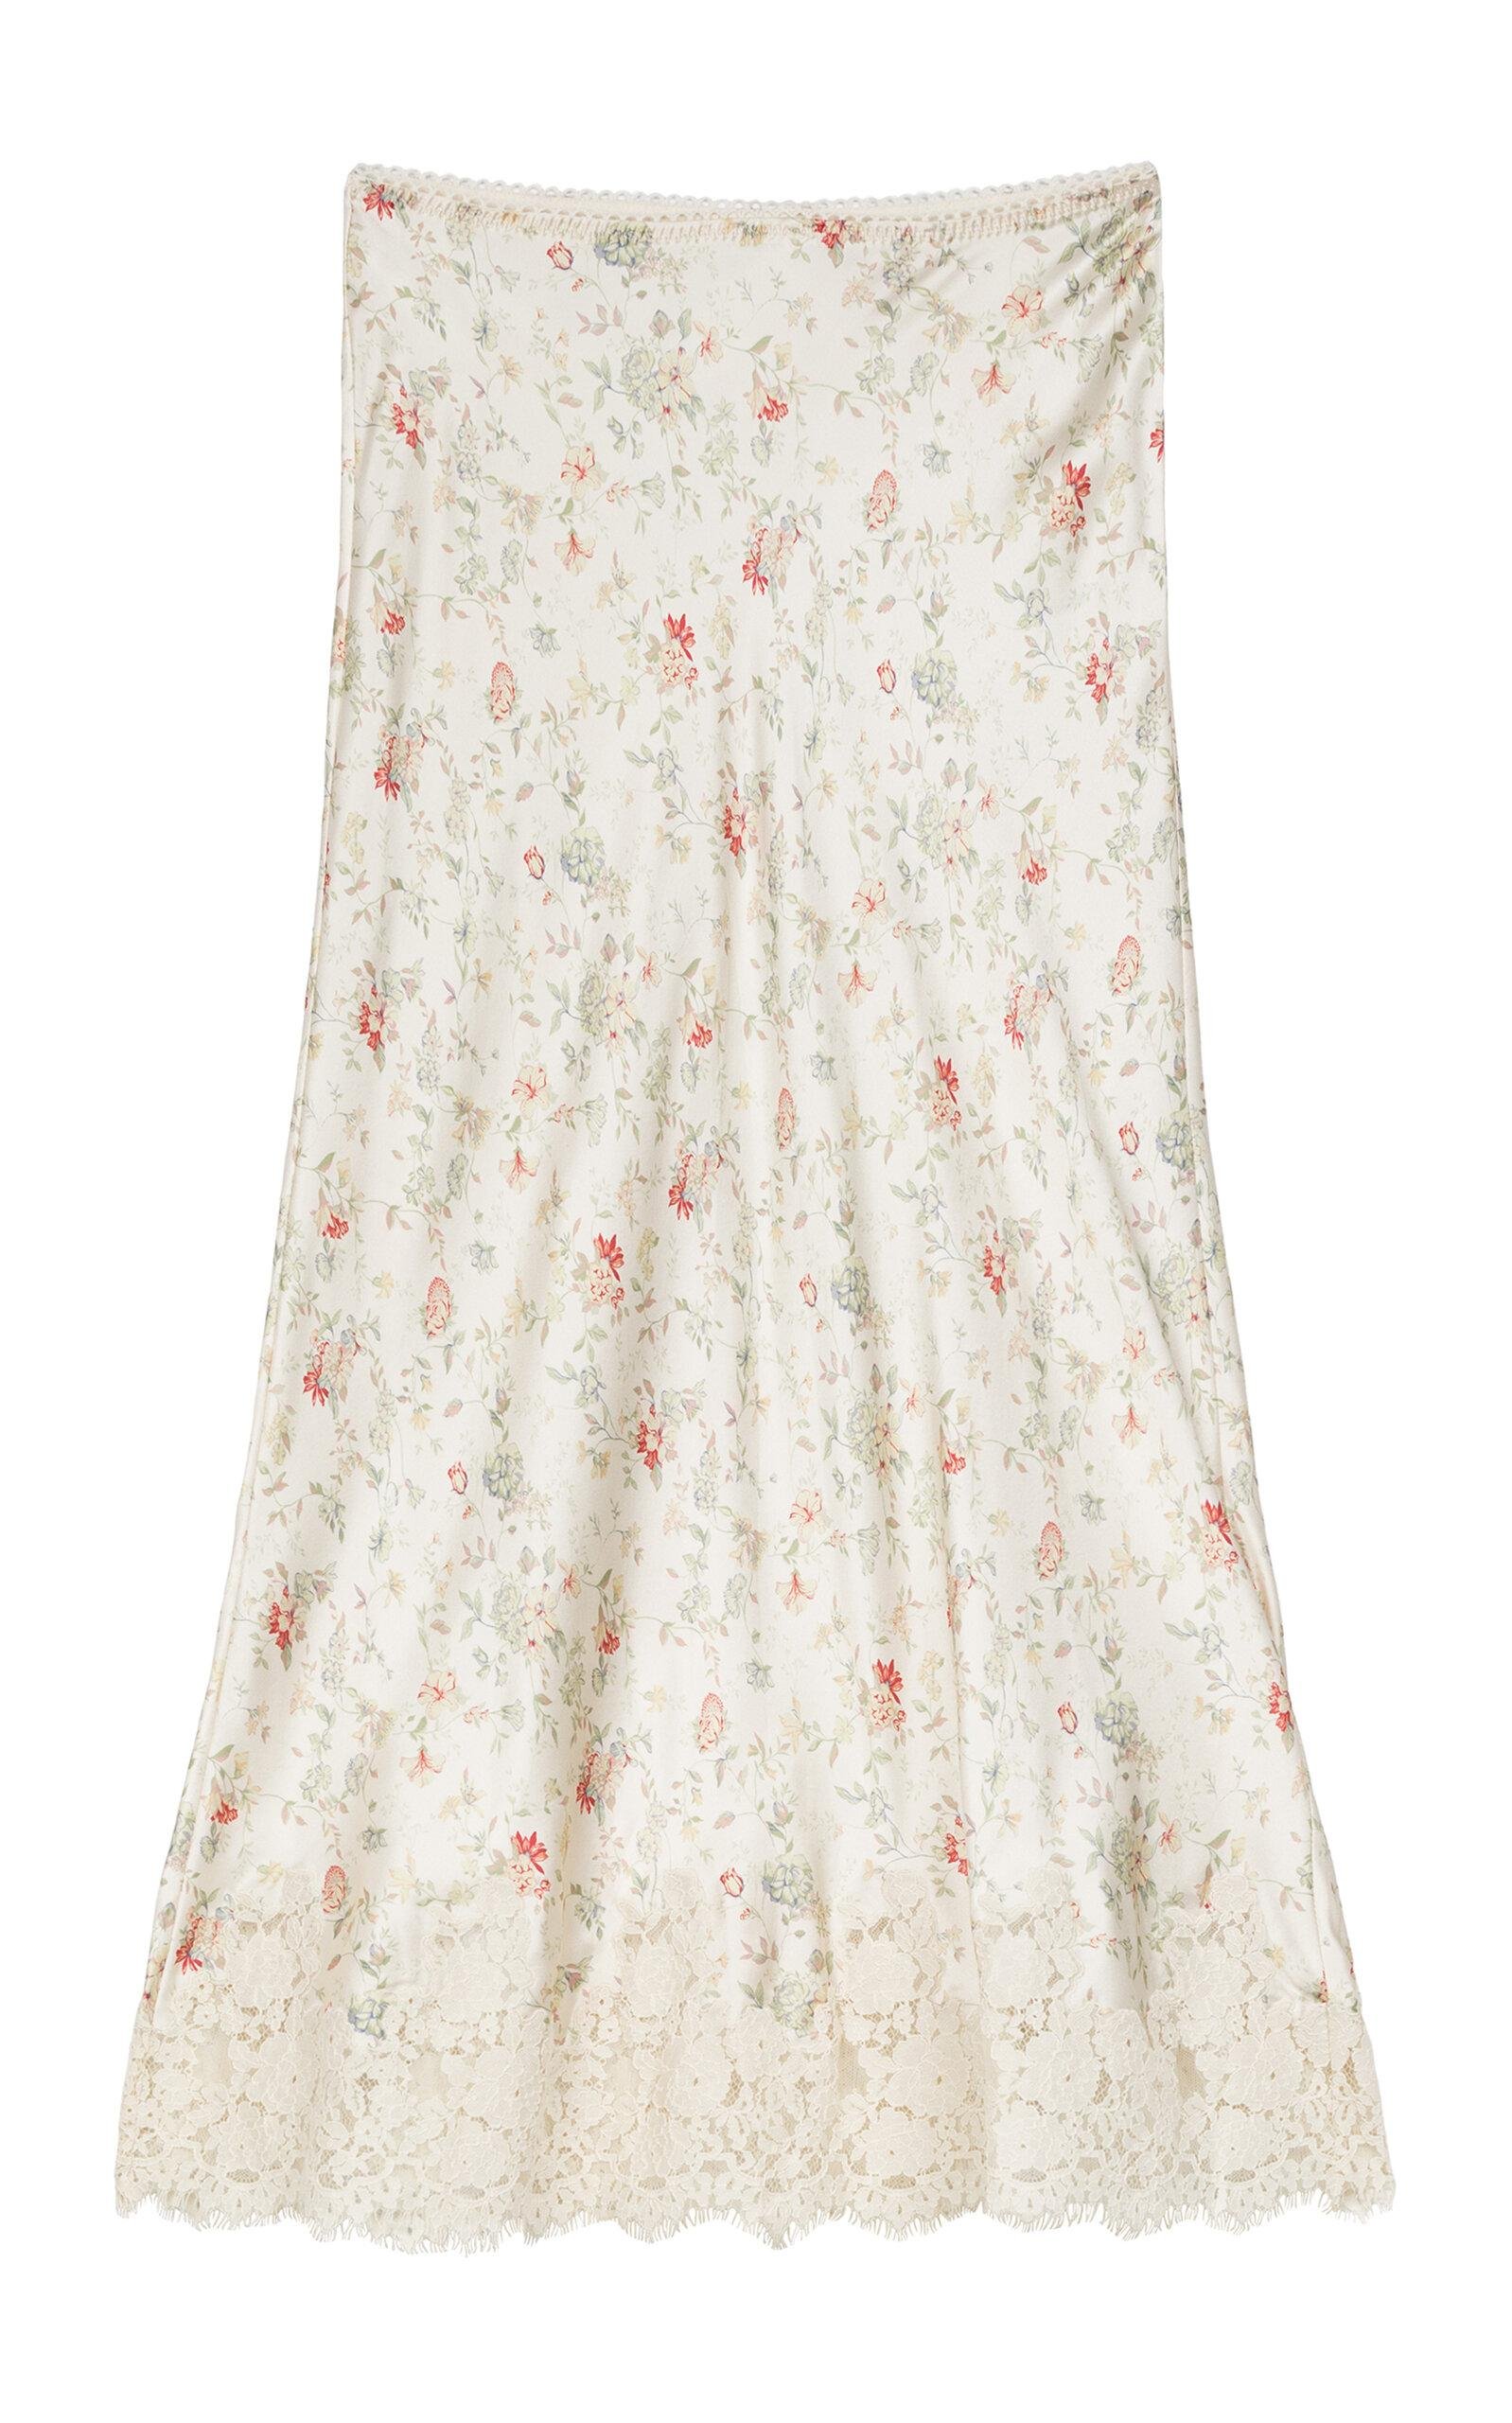 DÔEN - Elowen Lace-Trimmed Silk Midi Skirt - Floral - XS - Only At Moda Operandi by DOEN